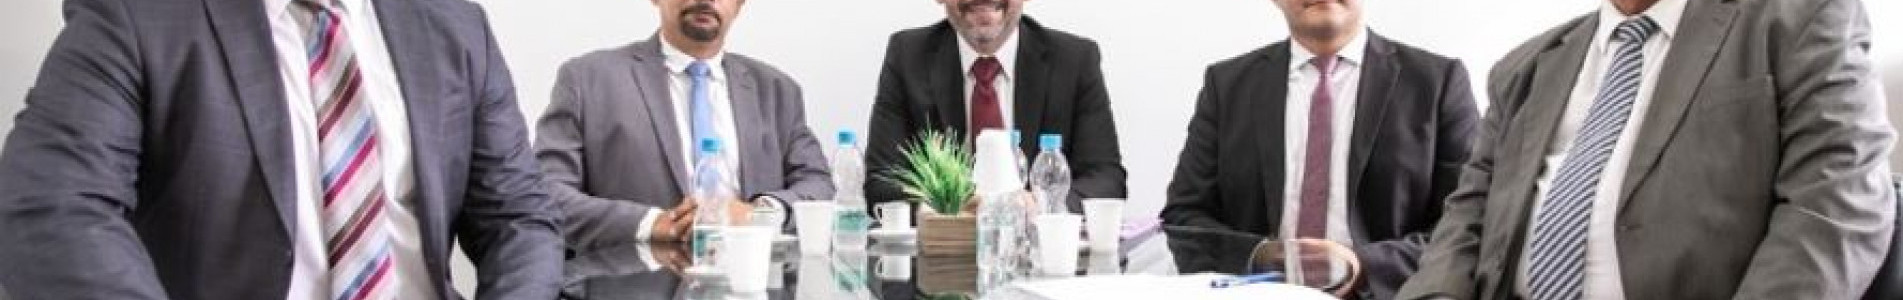 Sorocaba integra Rede de Ouvidorias parceiras do Ministério Público